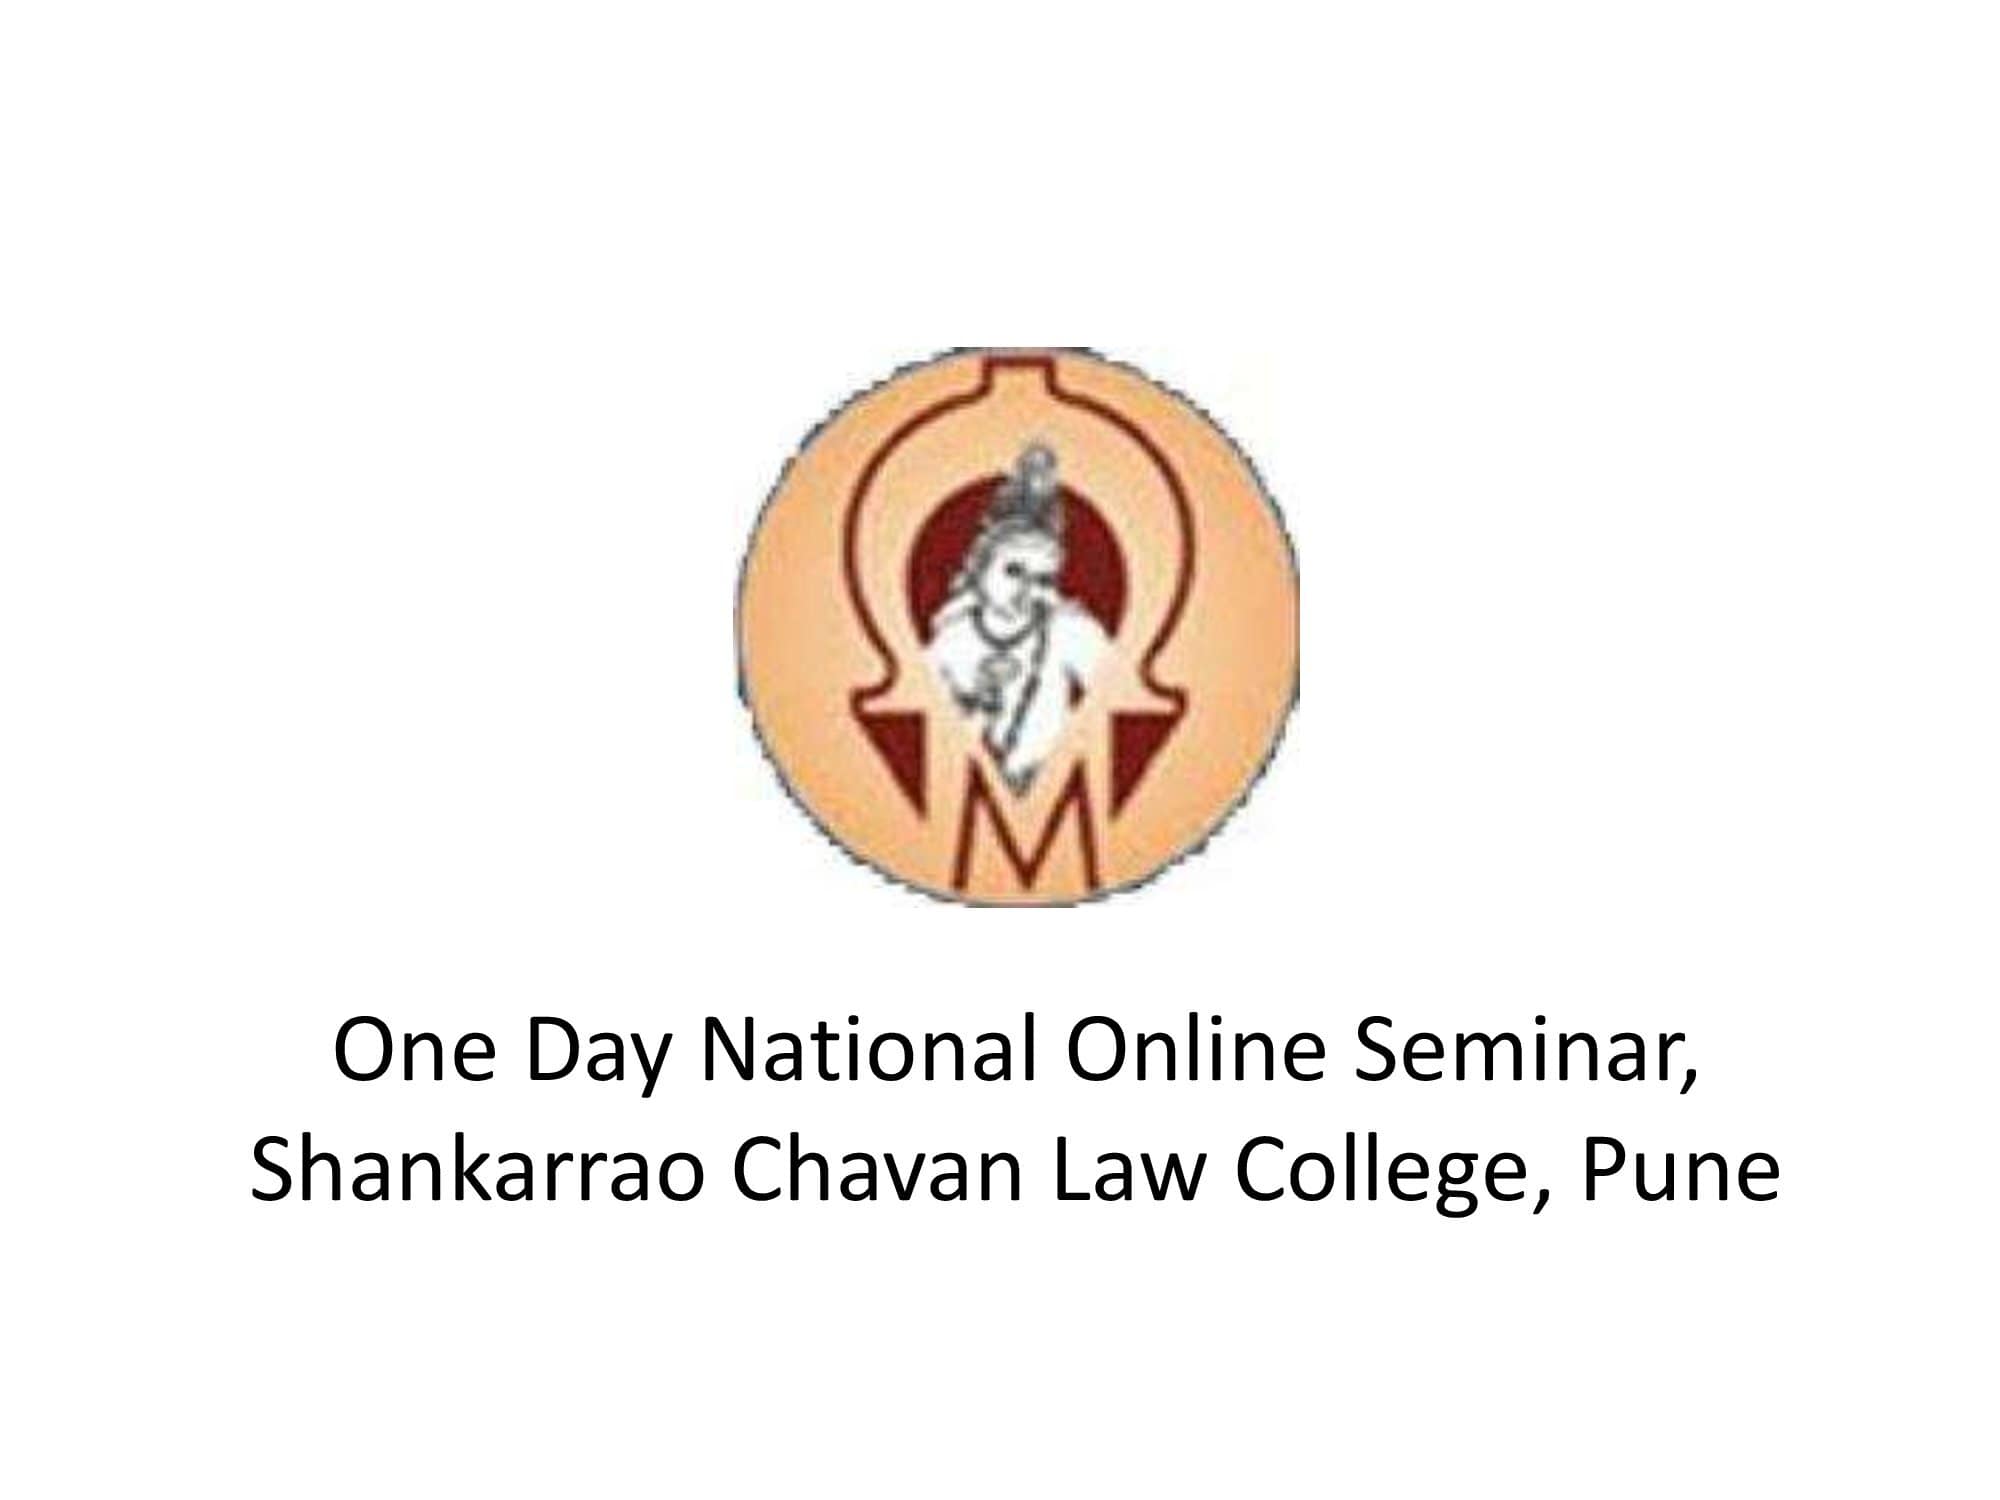 One Day National Online Seminar, Shankarrao Chavan Law College, Pune